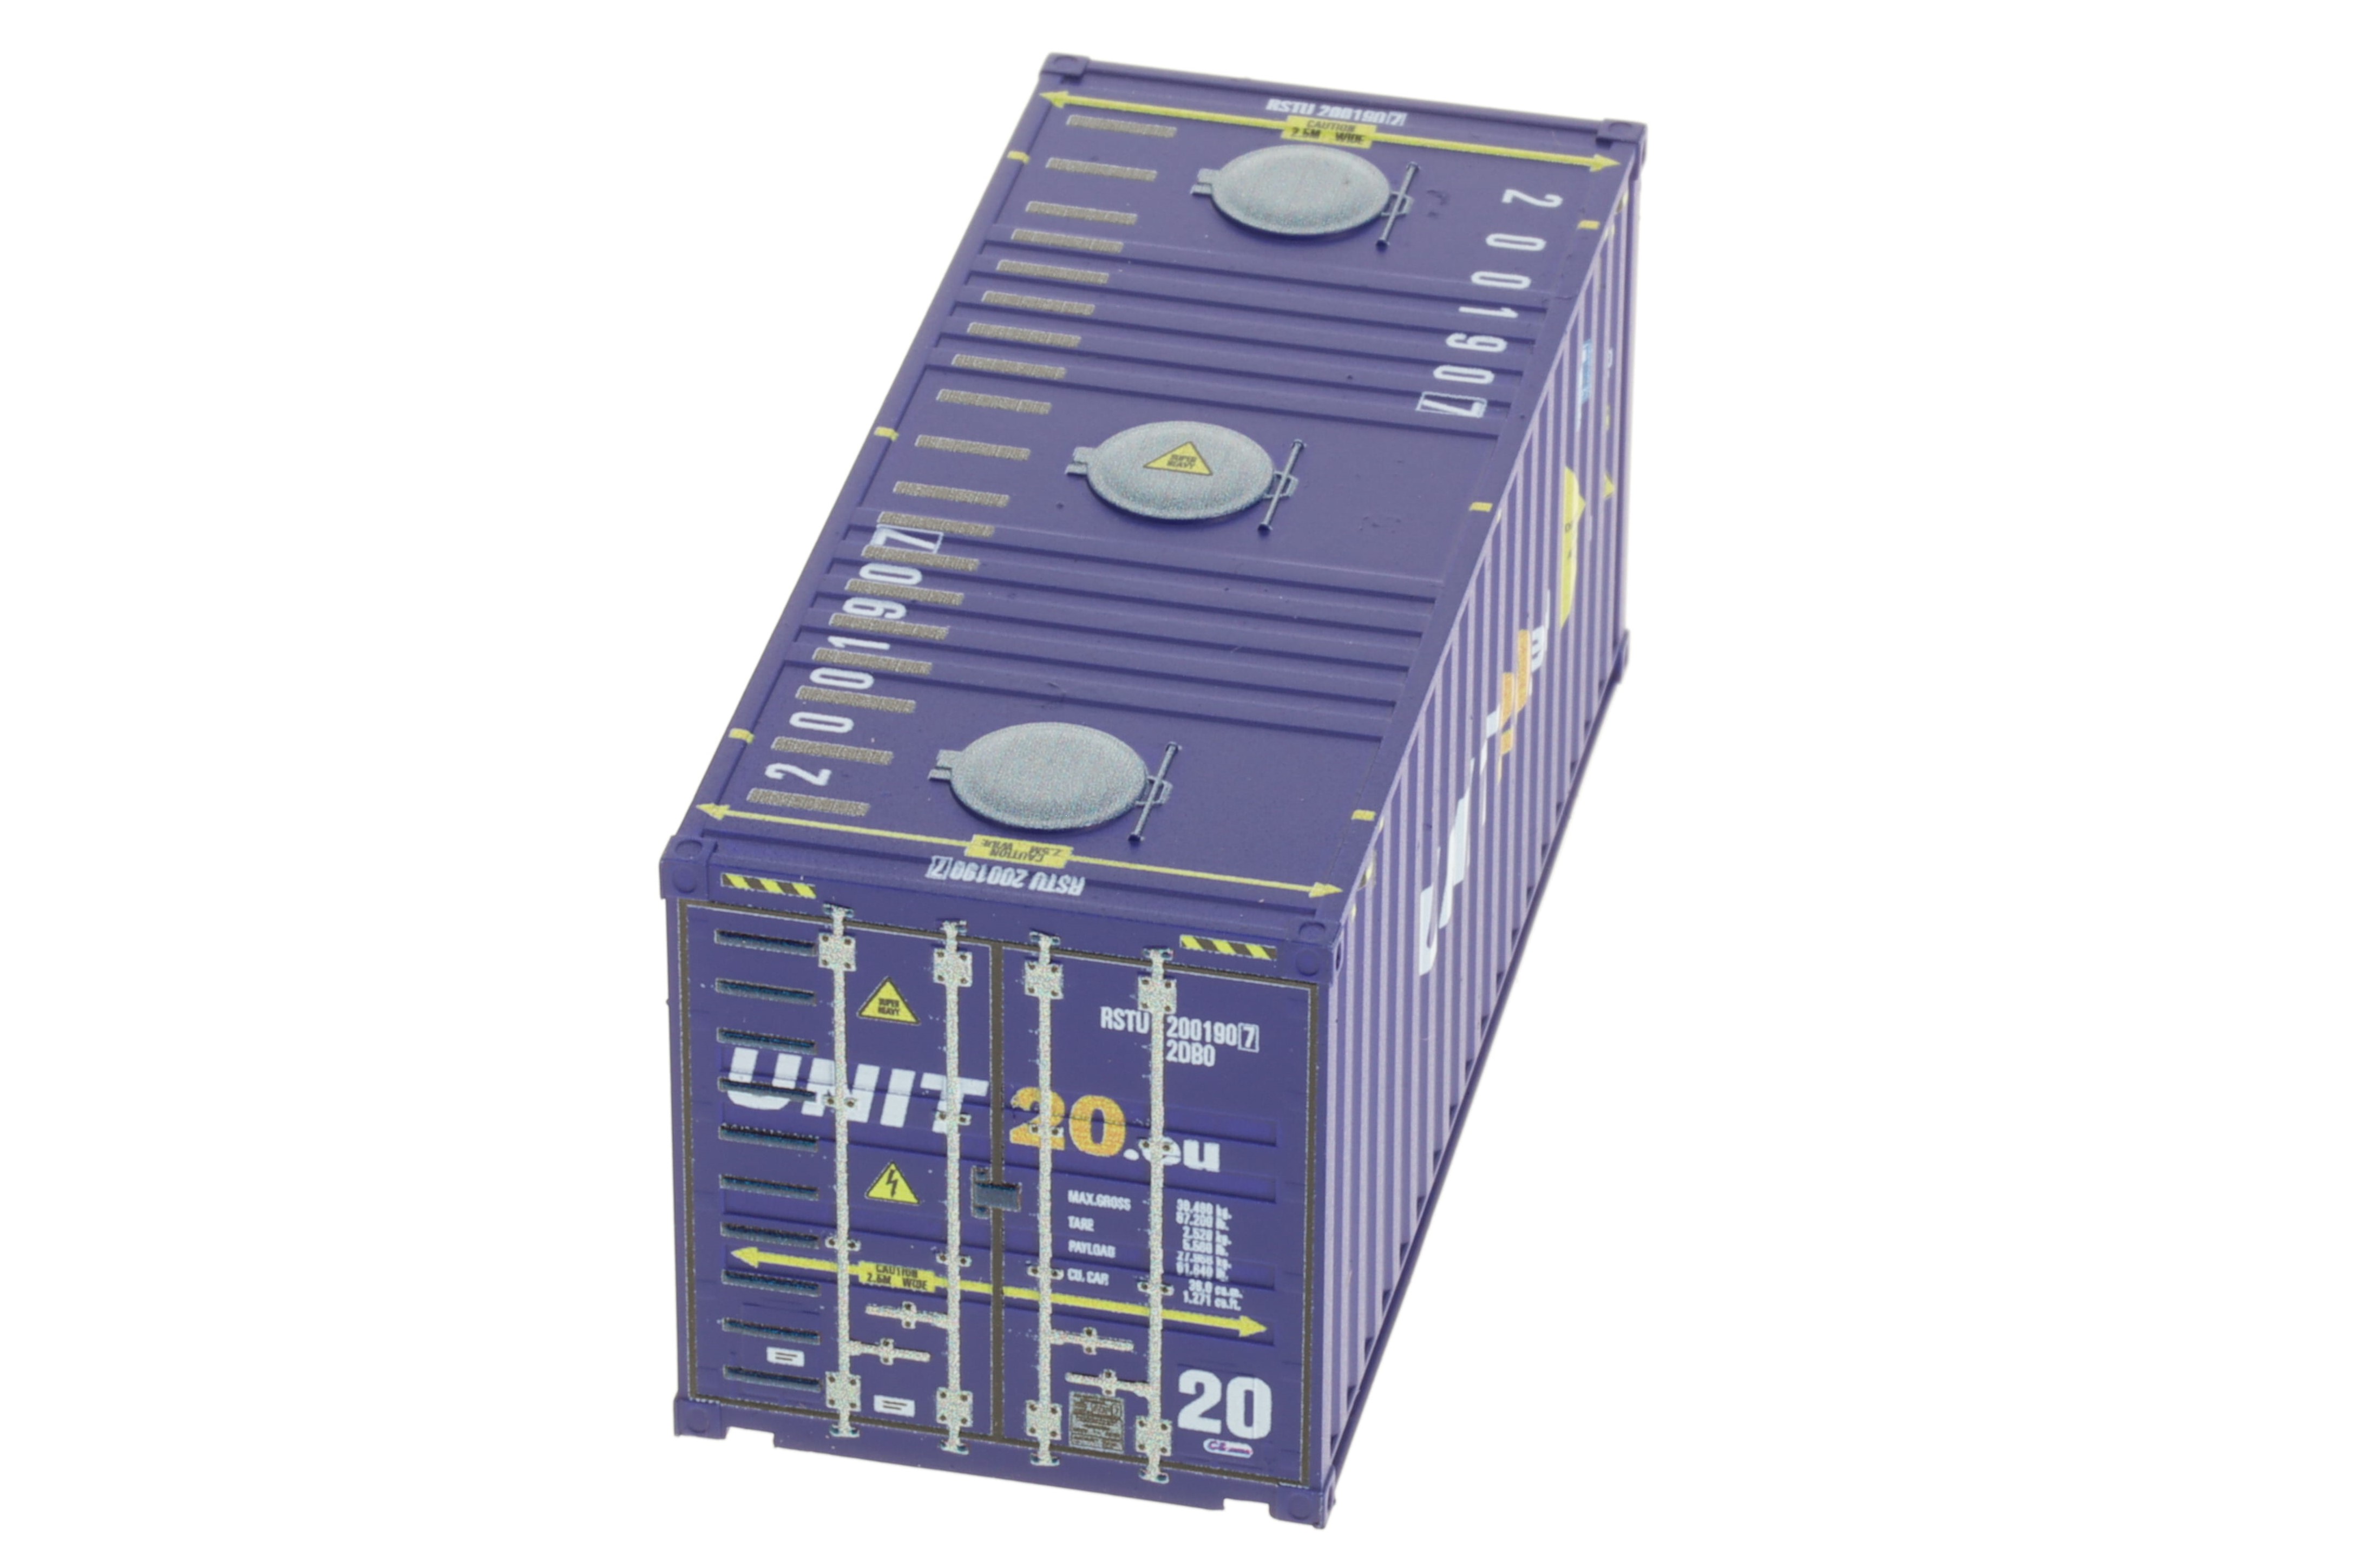 1:87 20´Bulk-Container UNIT20 blau, Behälternummer: RSTU 200190